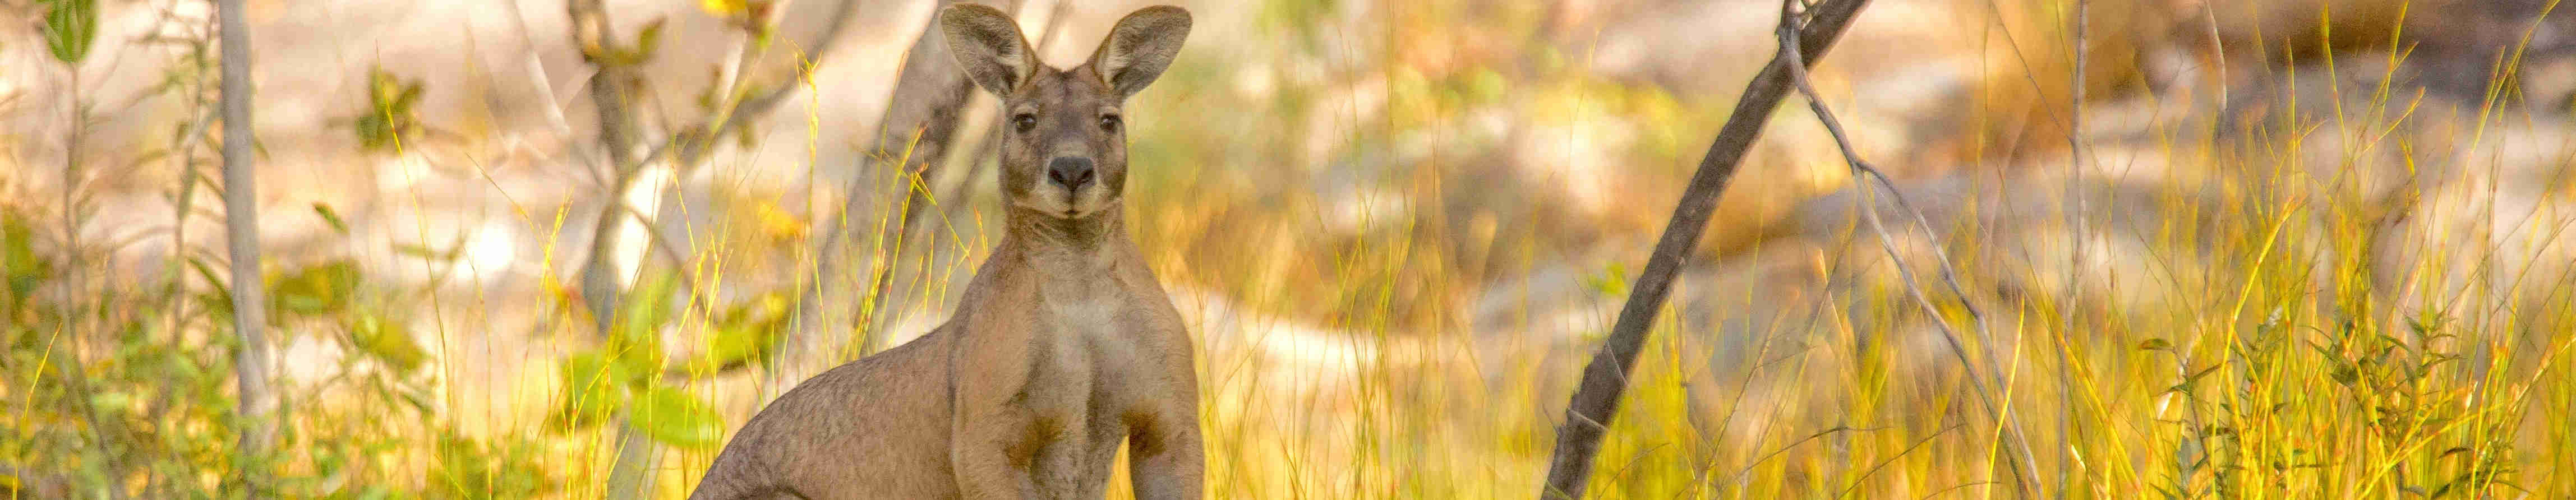 Kangourou au parc national de Kakadu